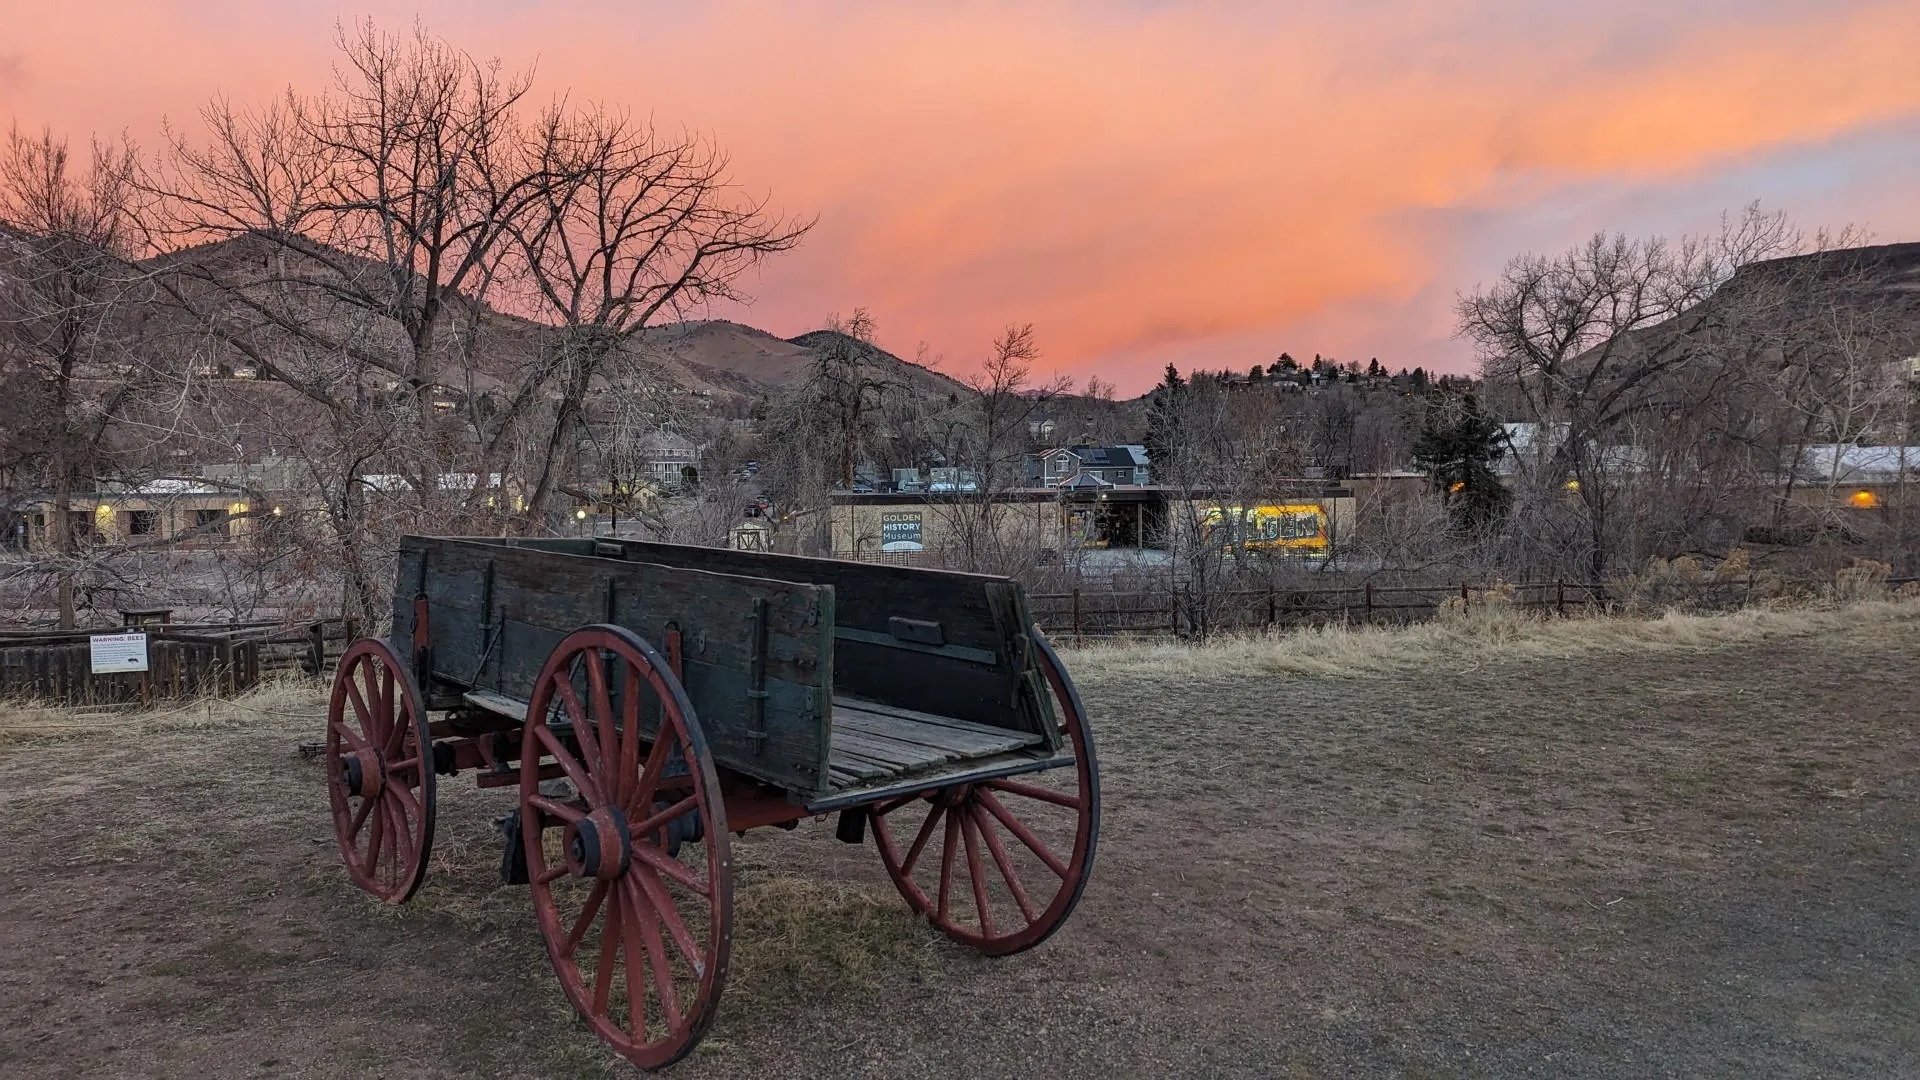 a wagon in a field at dawn